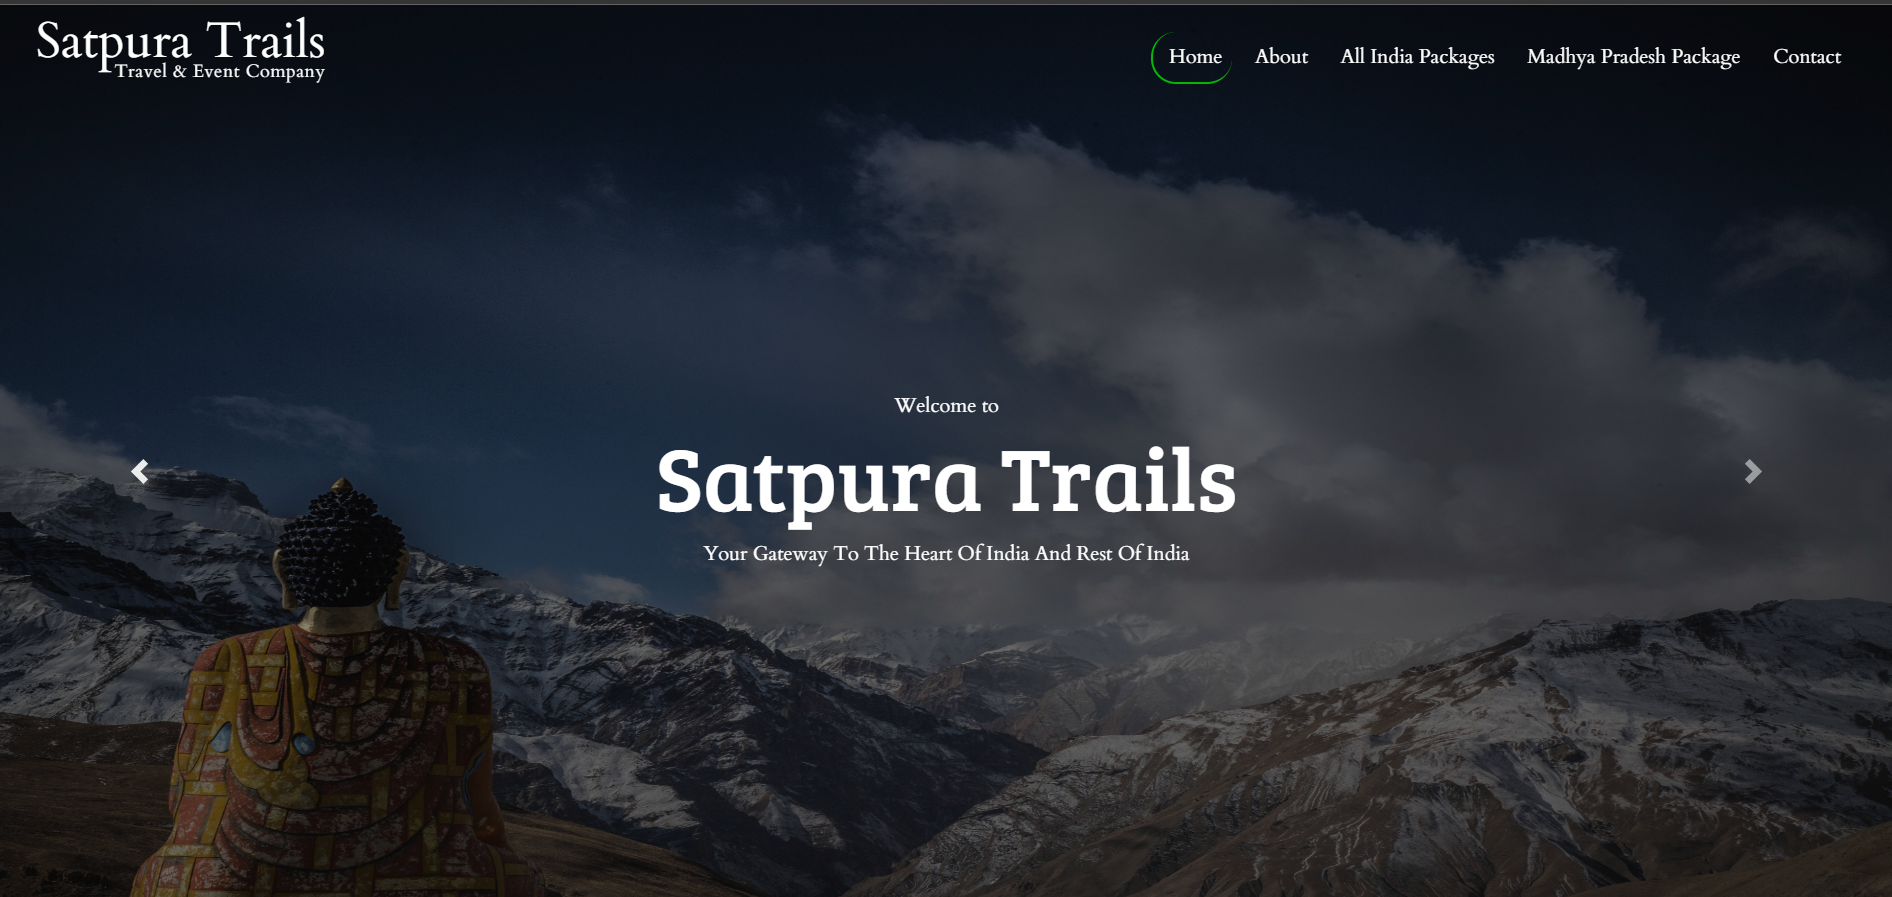 Website: Satpura Trails